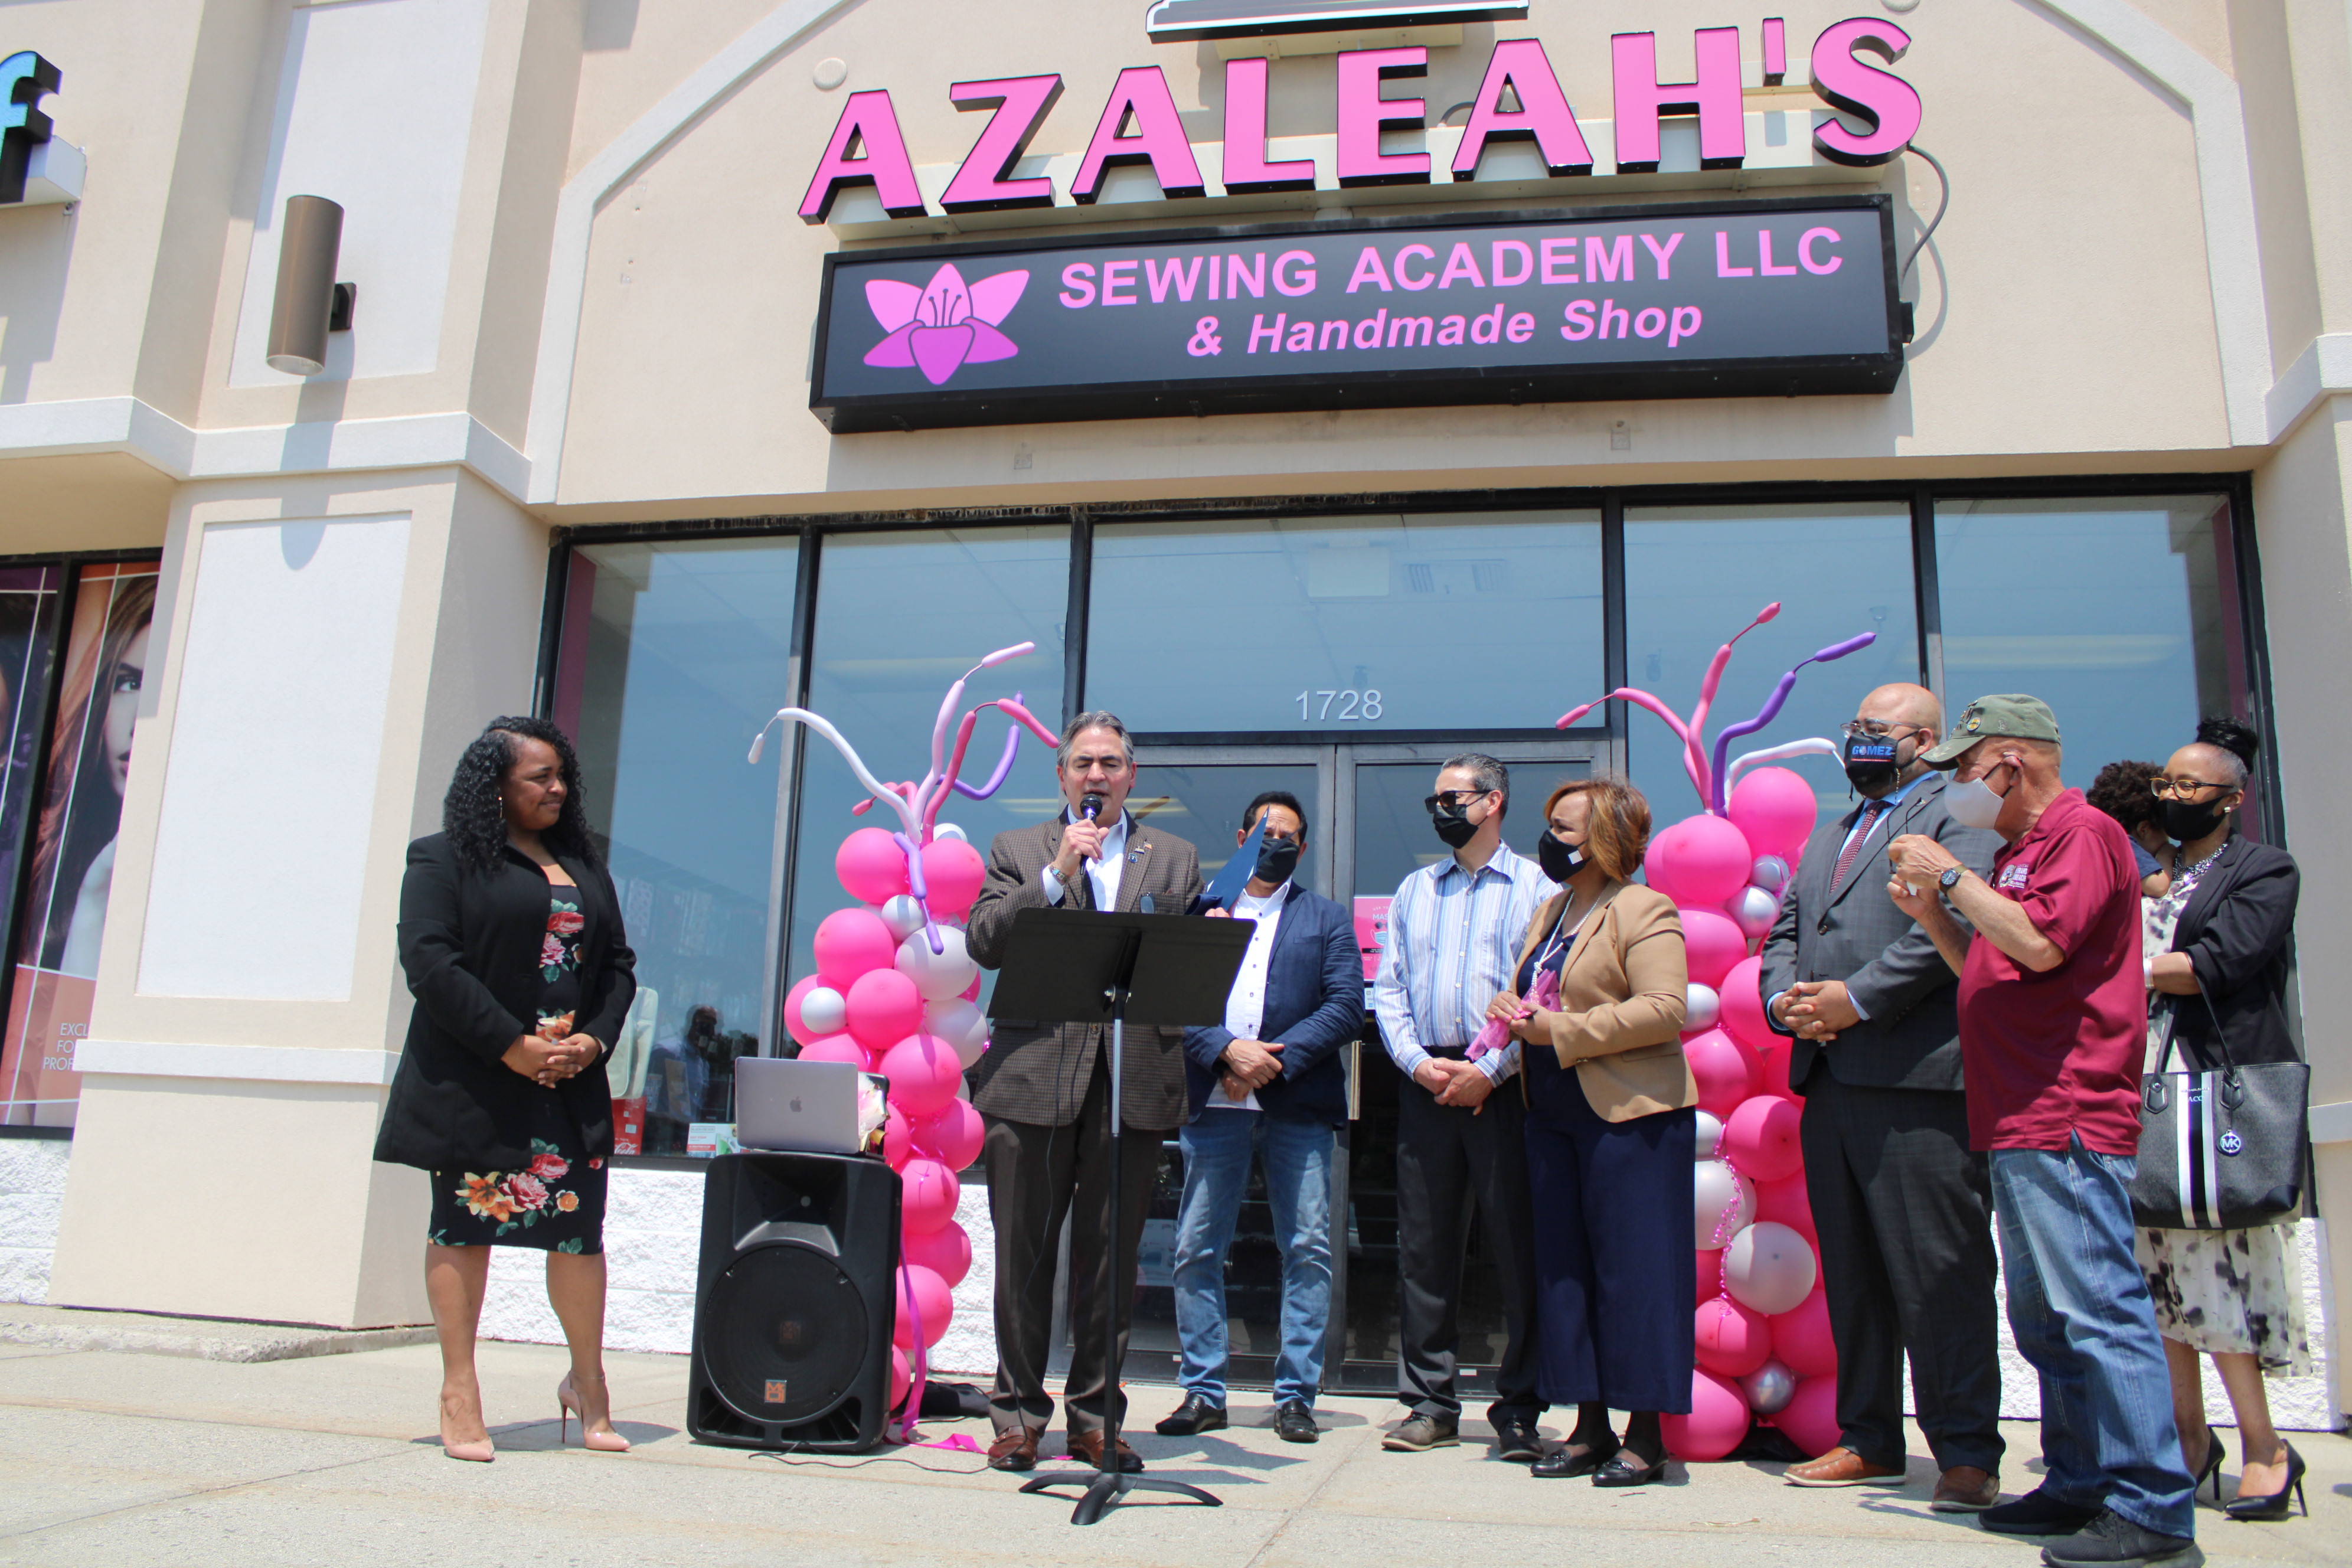 Azaleah's Sewing Academy LLC